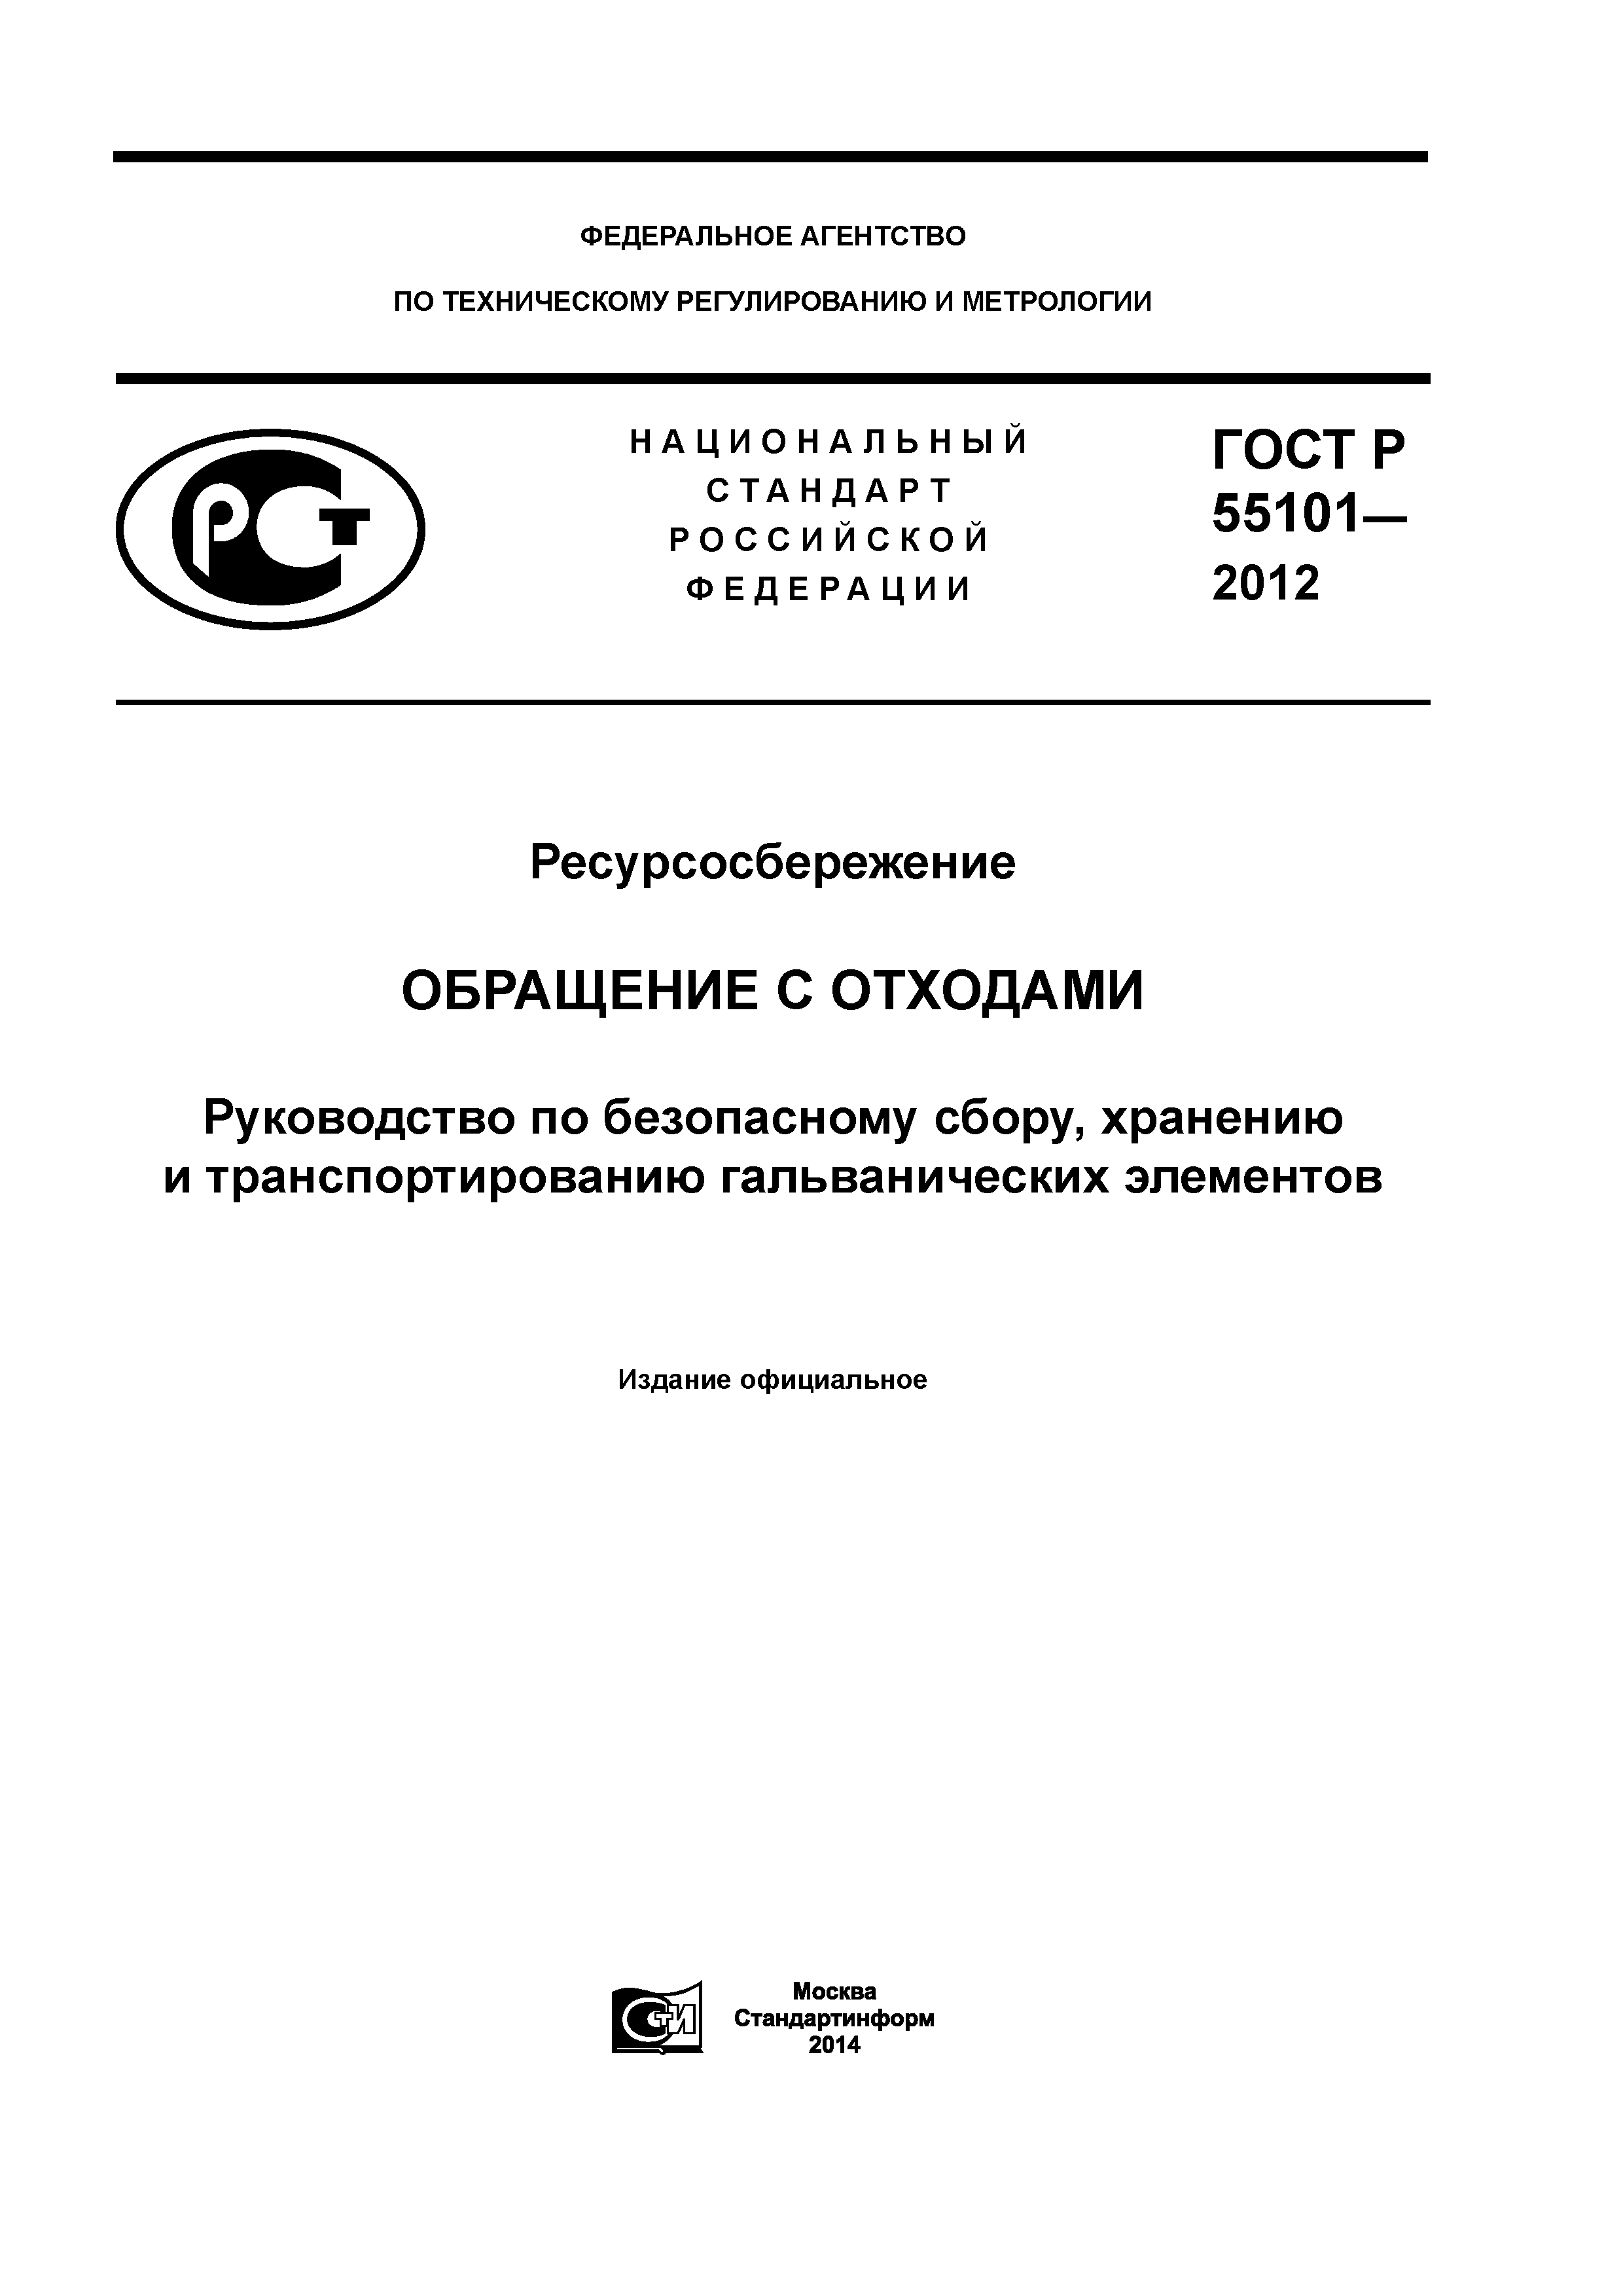 ГОСТ Р 55101-2012